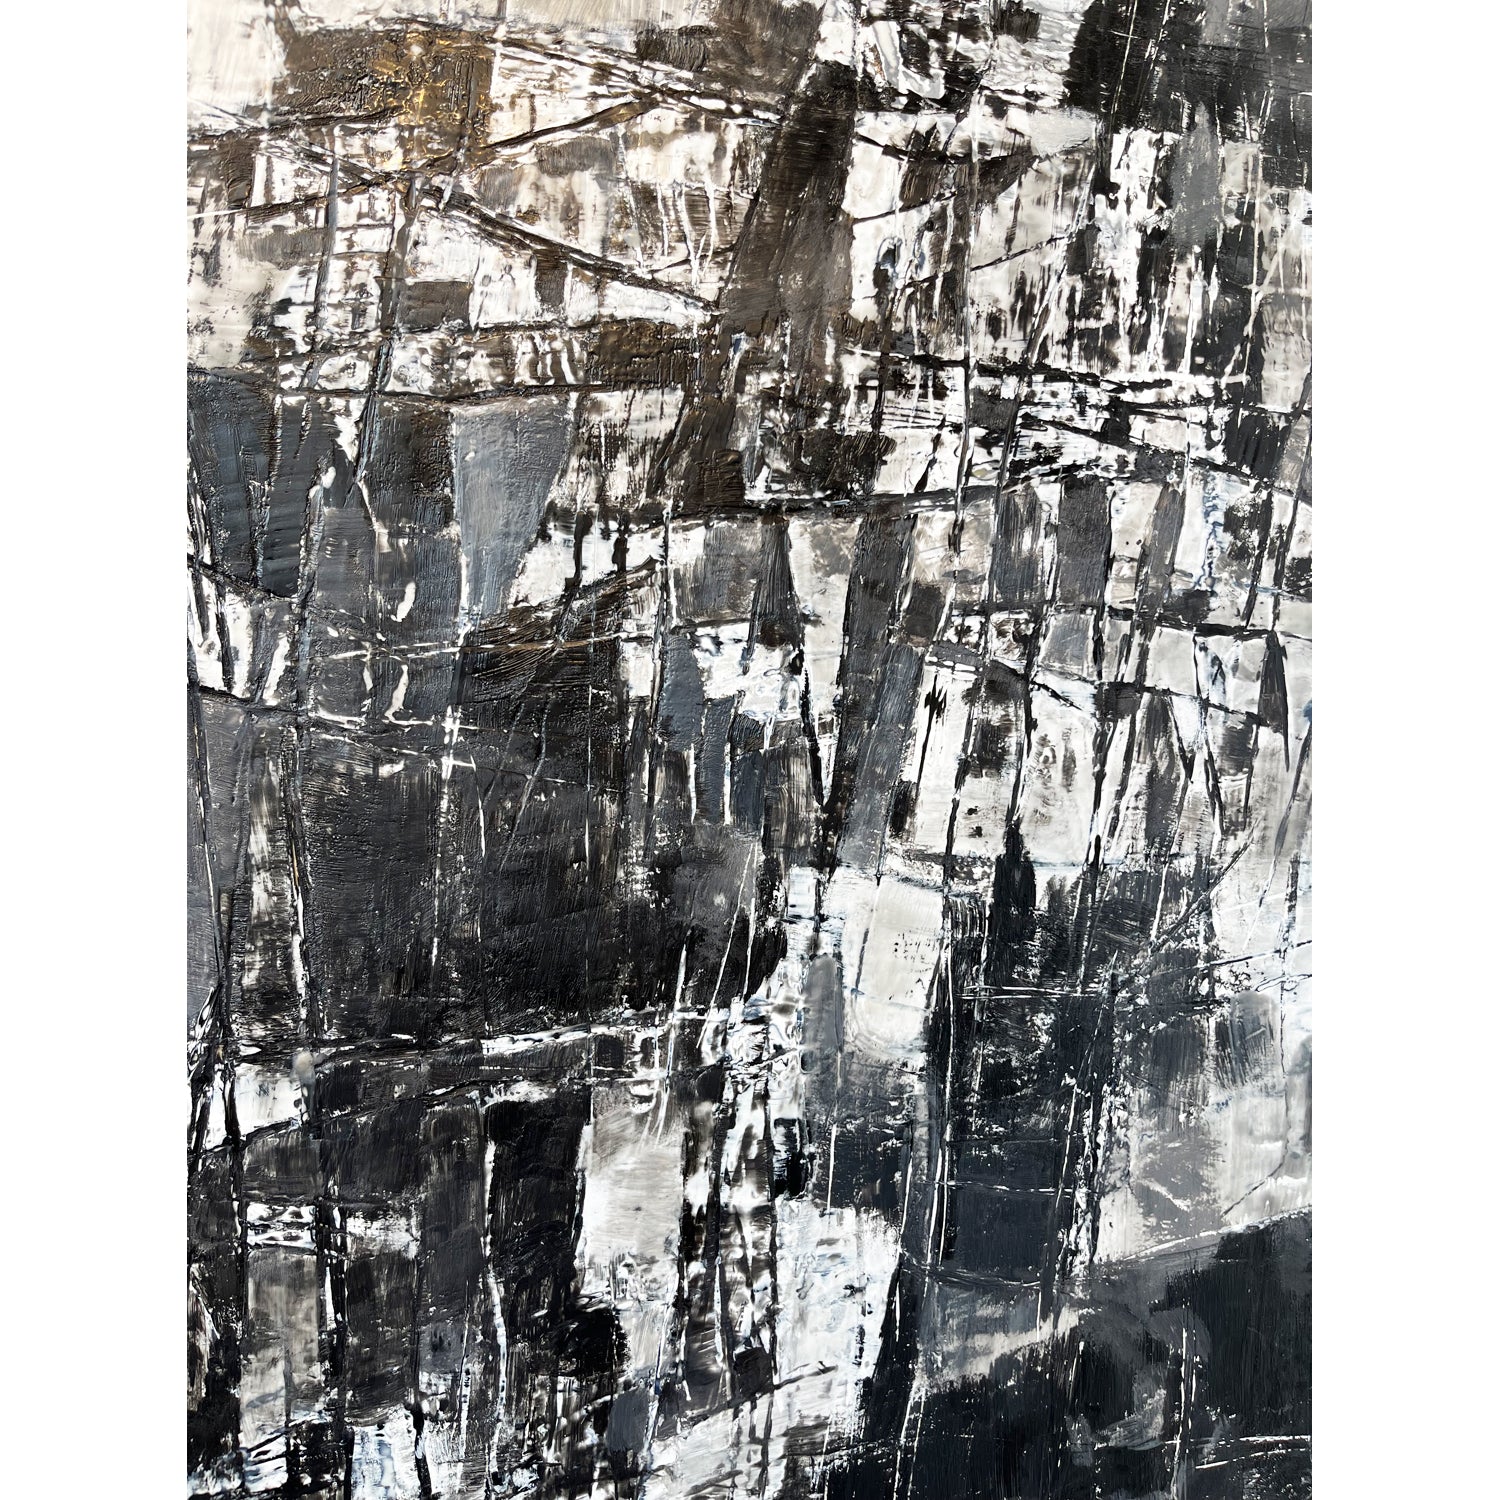 Anastessia Bettas - Fields of Dreams I, 60" x 24"